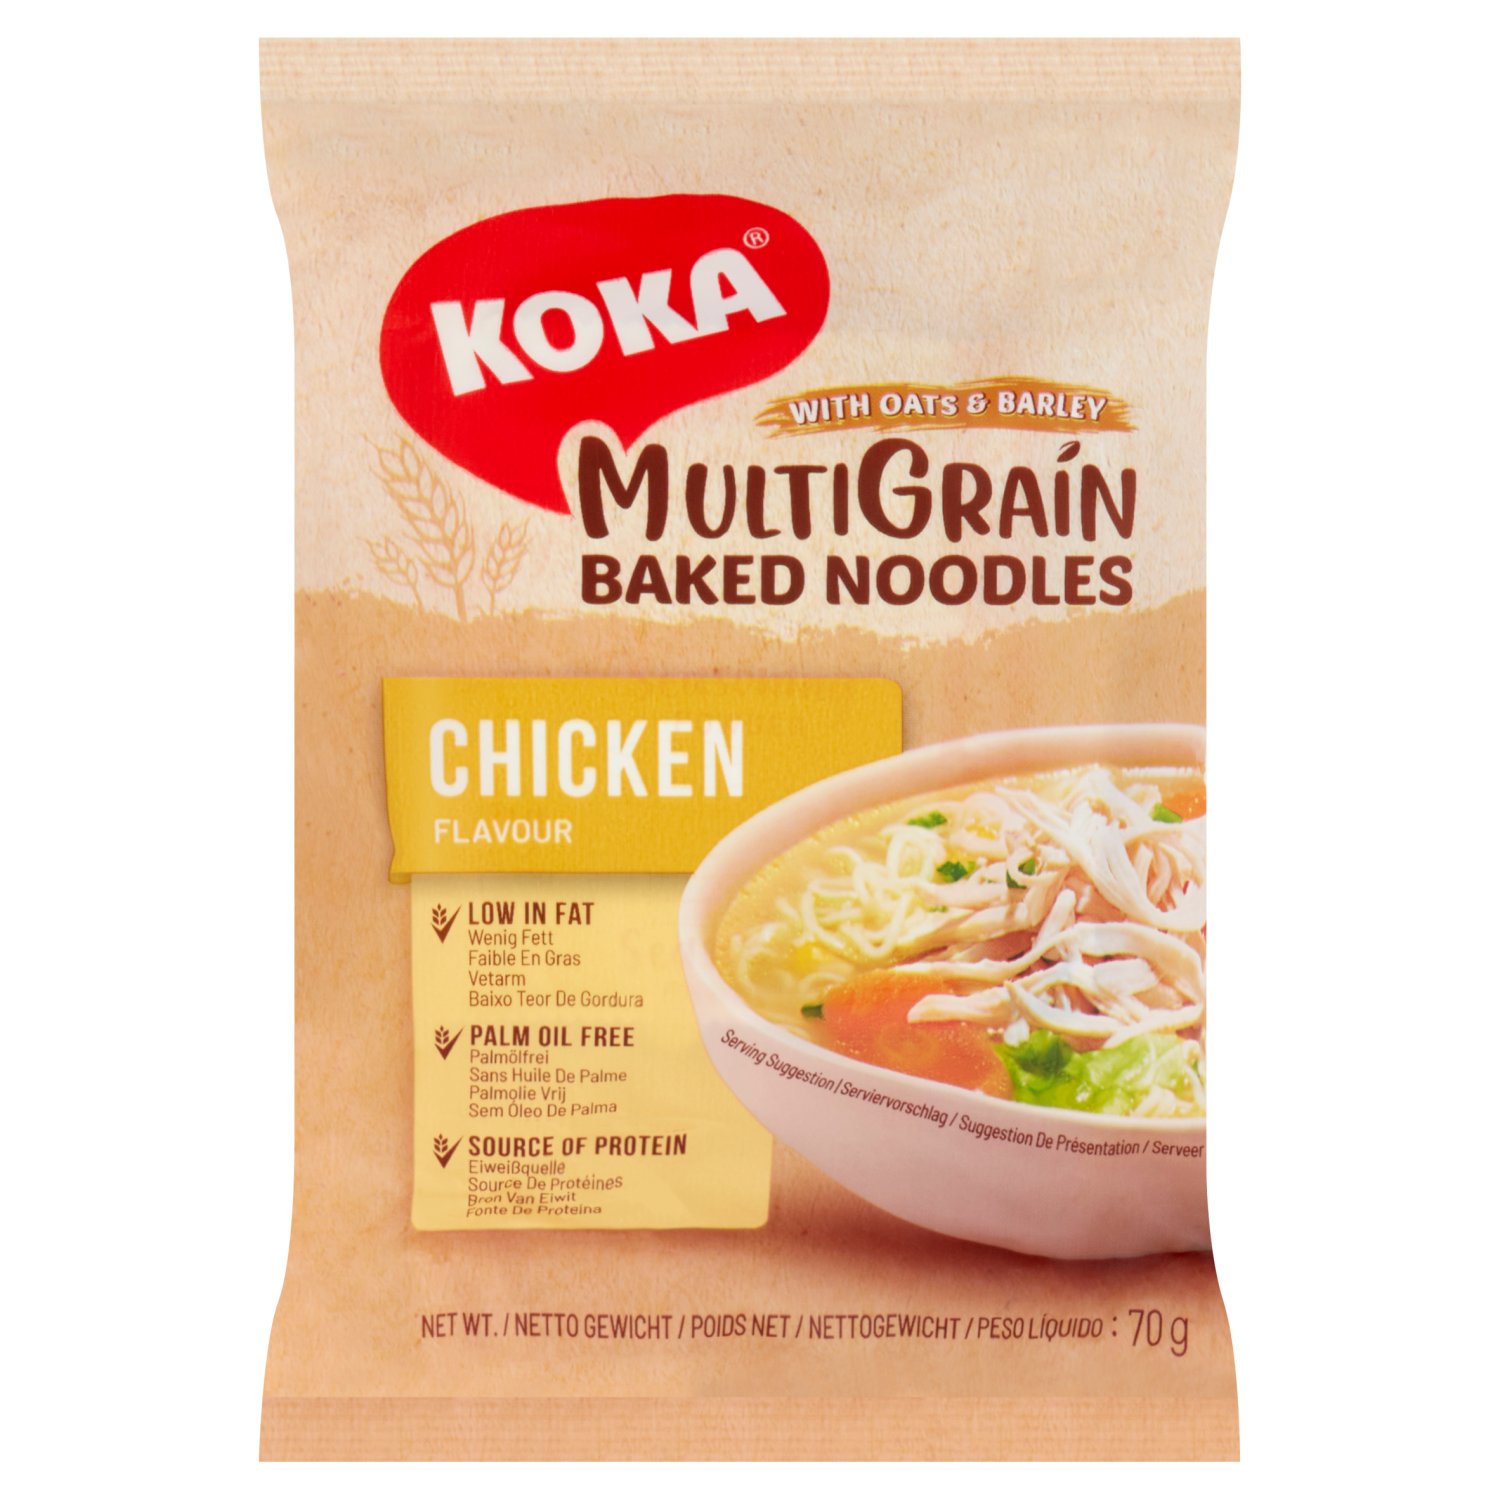 Koka Chicken Multigrain Baked Noodle (70 g)